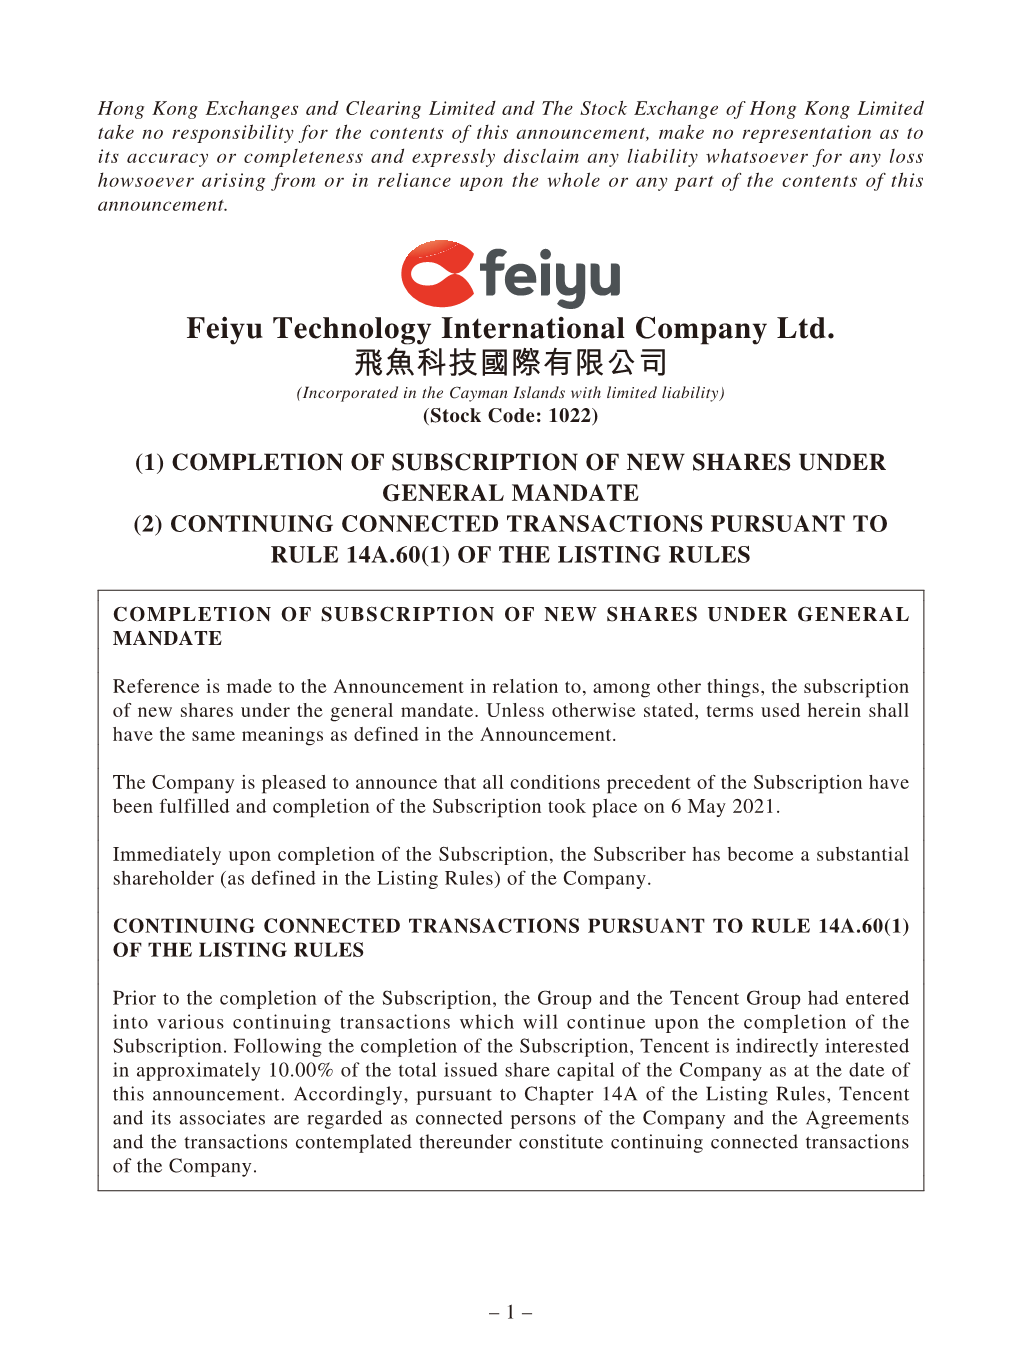 Feiyu Technology International Company Ltd. 飛魚科技國際有限公司 (Incorporated in the Cayman Islands with Limited Liability) (Stock Code: 1022)